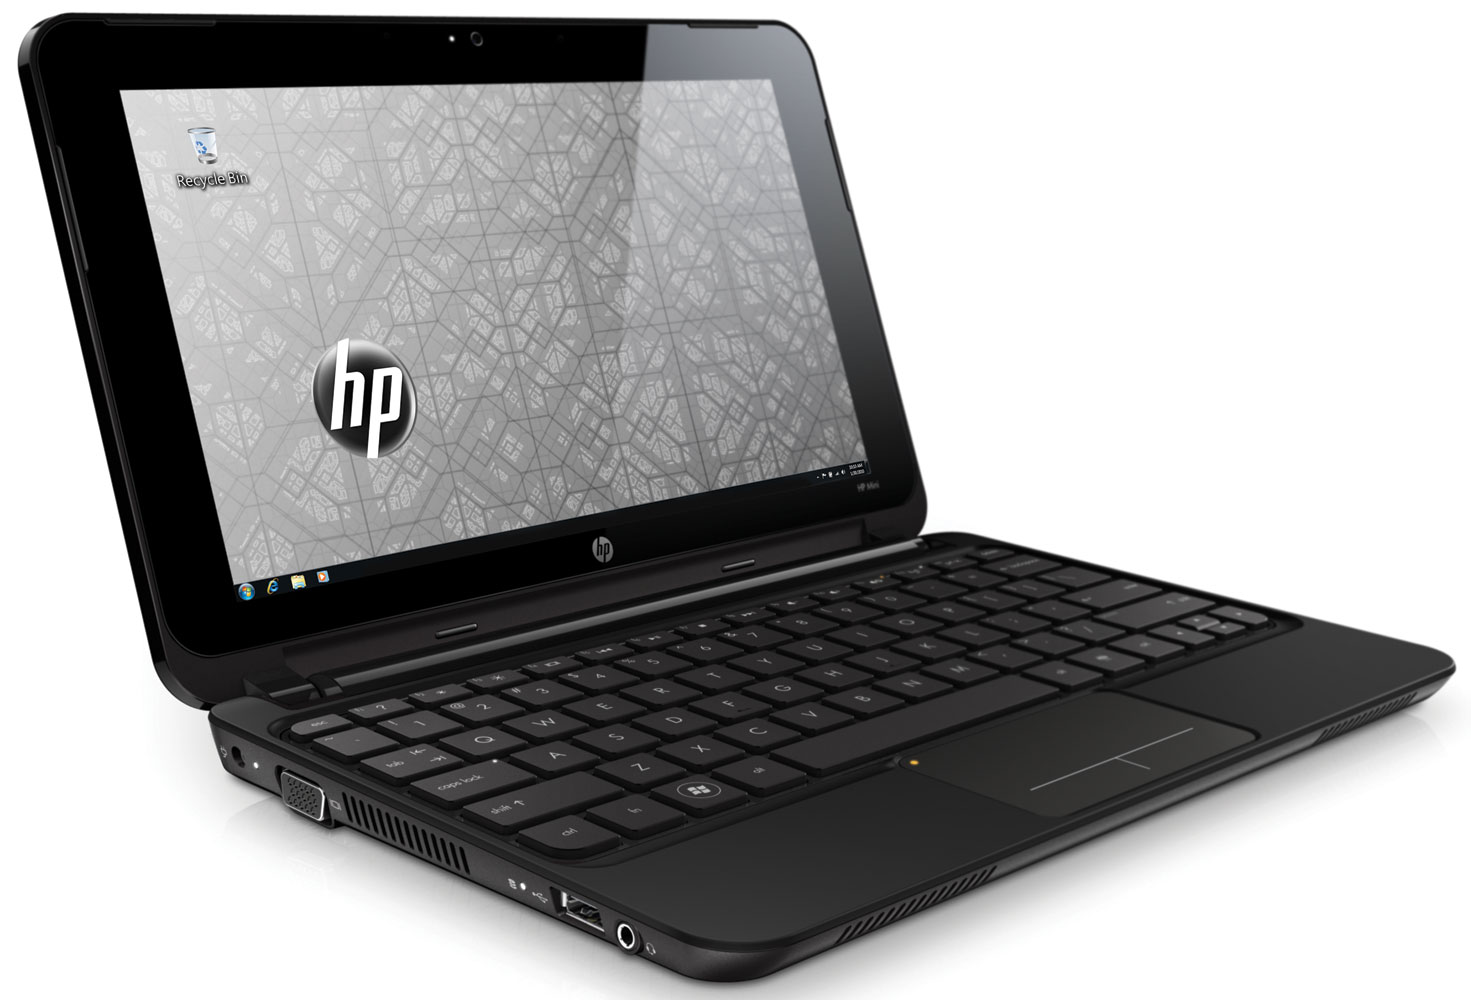 HP Mini 110 Series Netbook